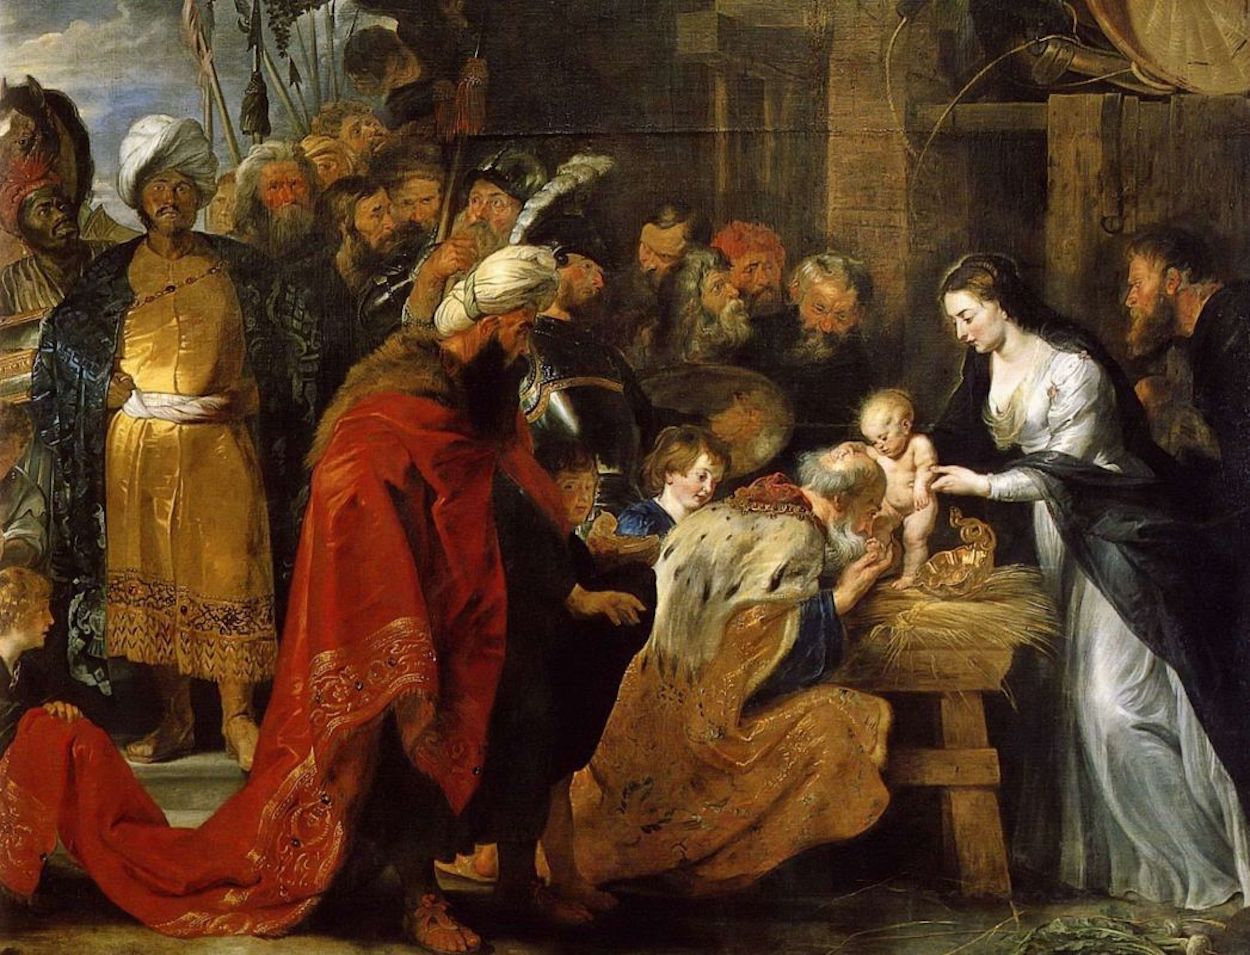 Pokłon Trzech Króli by Peter Paul Rubens - 1616-1617 - 251 x 338 cm 